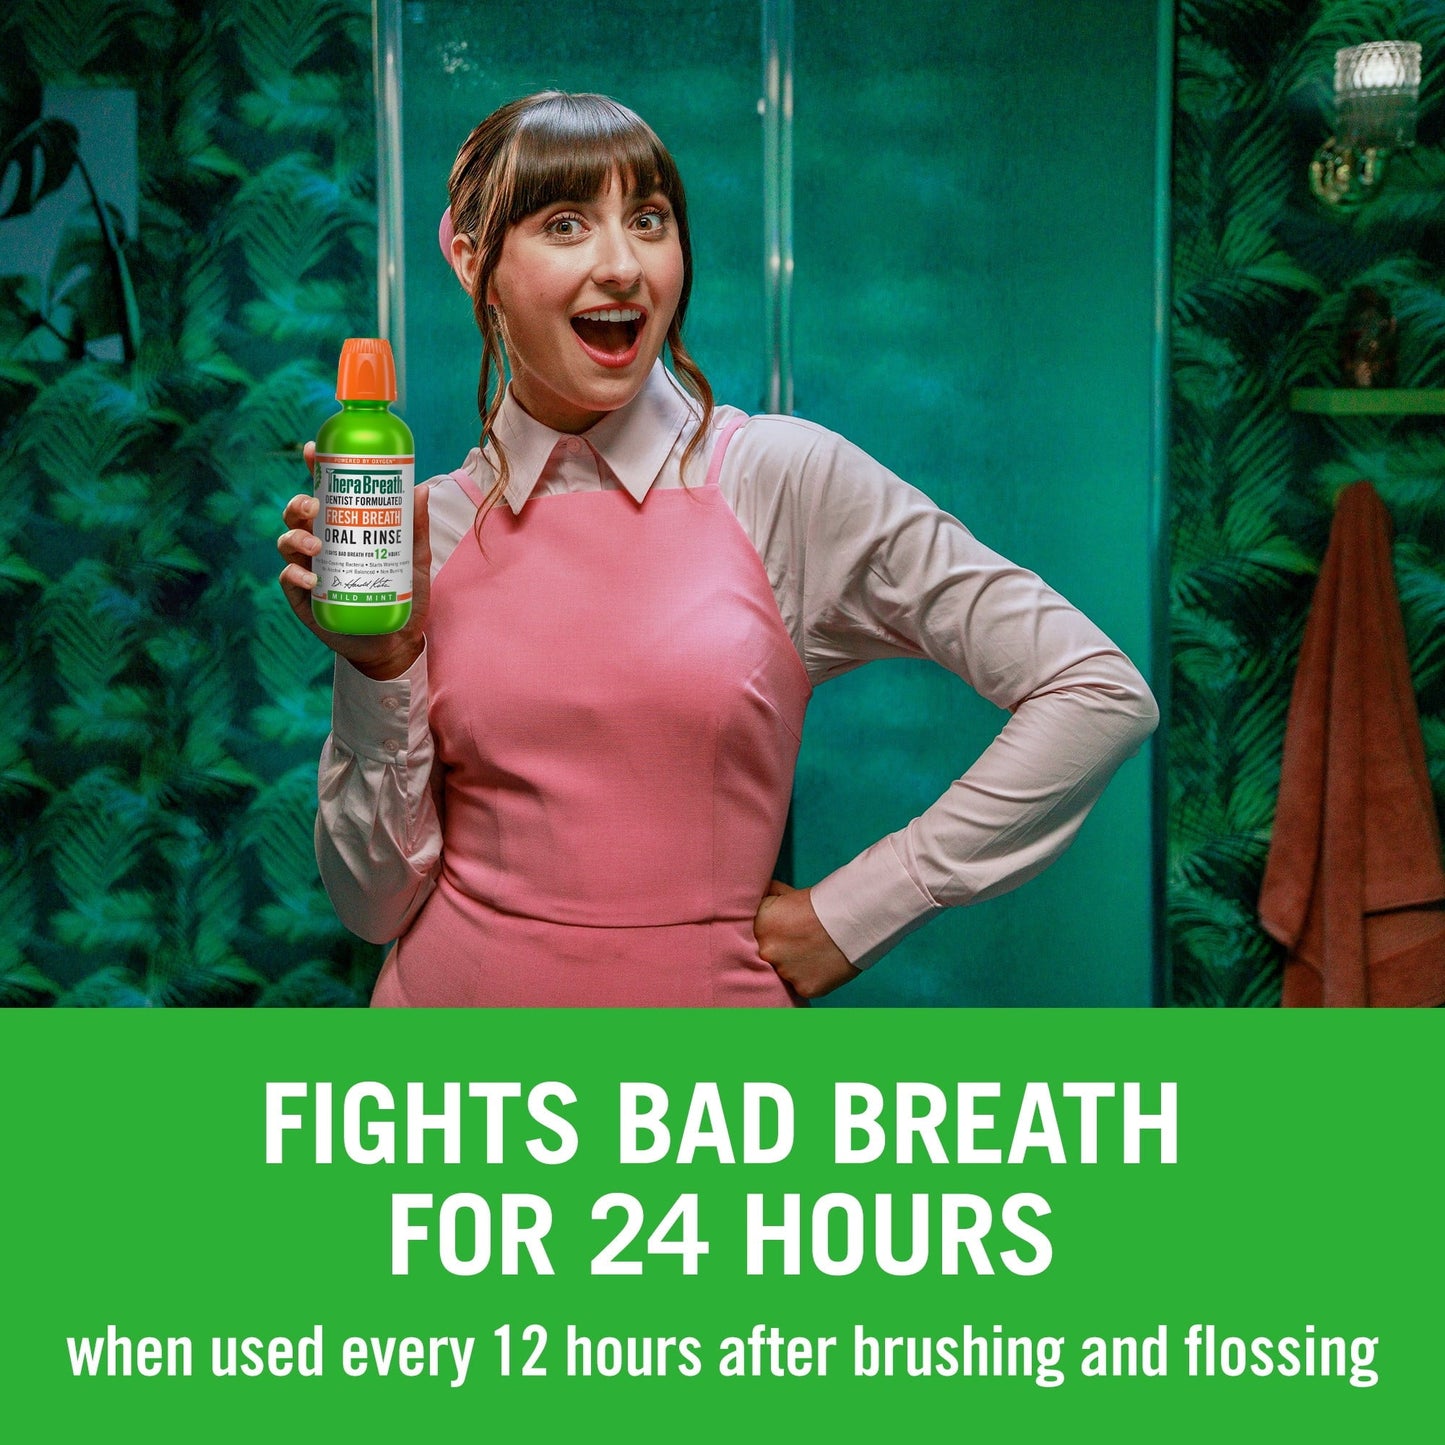 TheraBreath Fresh Breath Mouthwash, Mild Mint, Alcohol-Free, 1 Liter